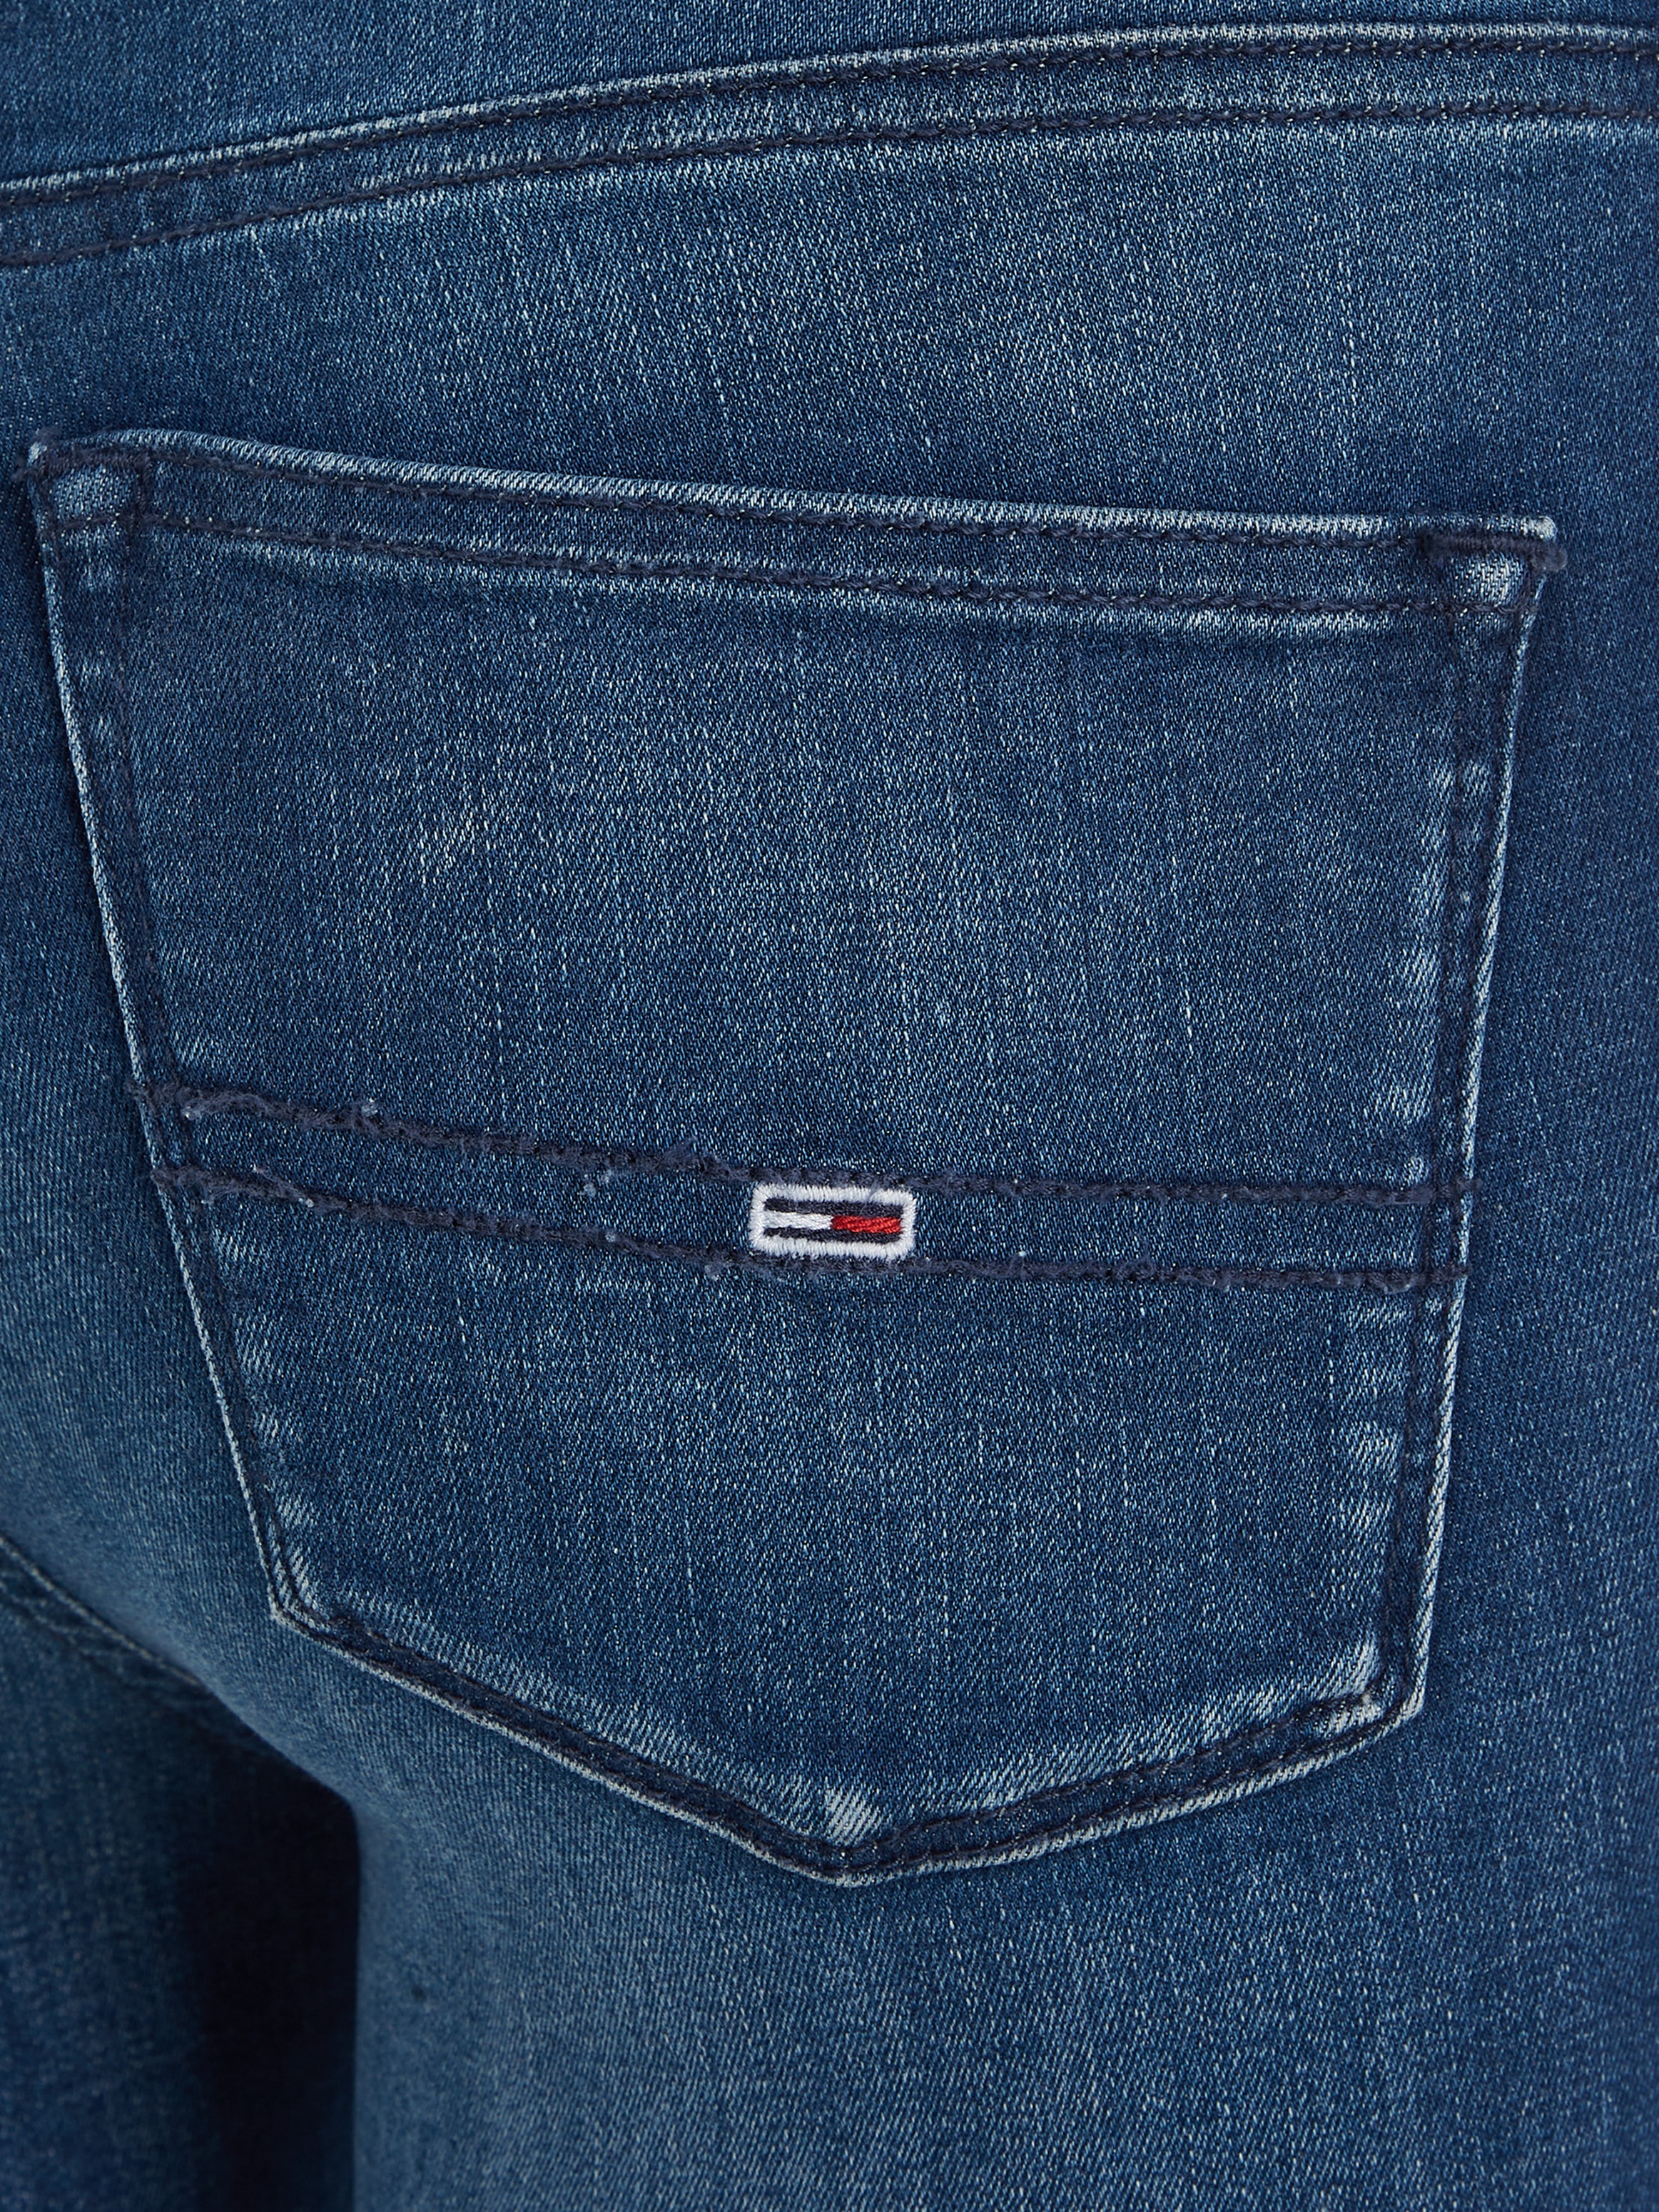 Tommy Jeans Skinny-fit-Jeans »NORA MR SKNY«, mit Tommy Jeans Logo-Badge & Stickereien